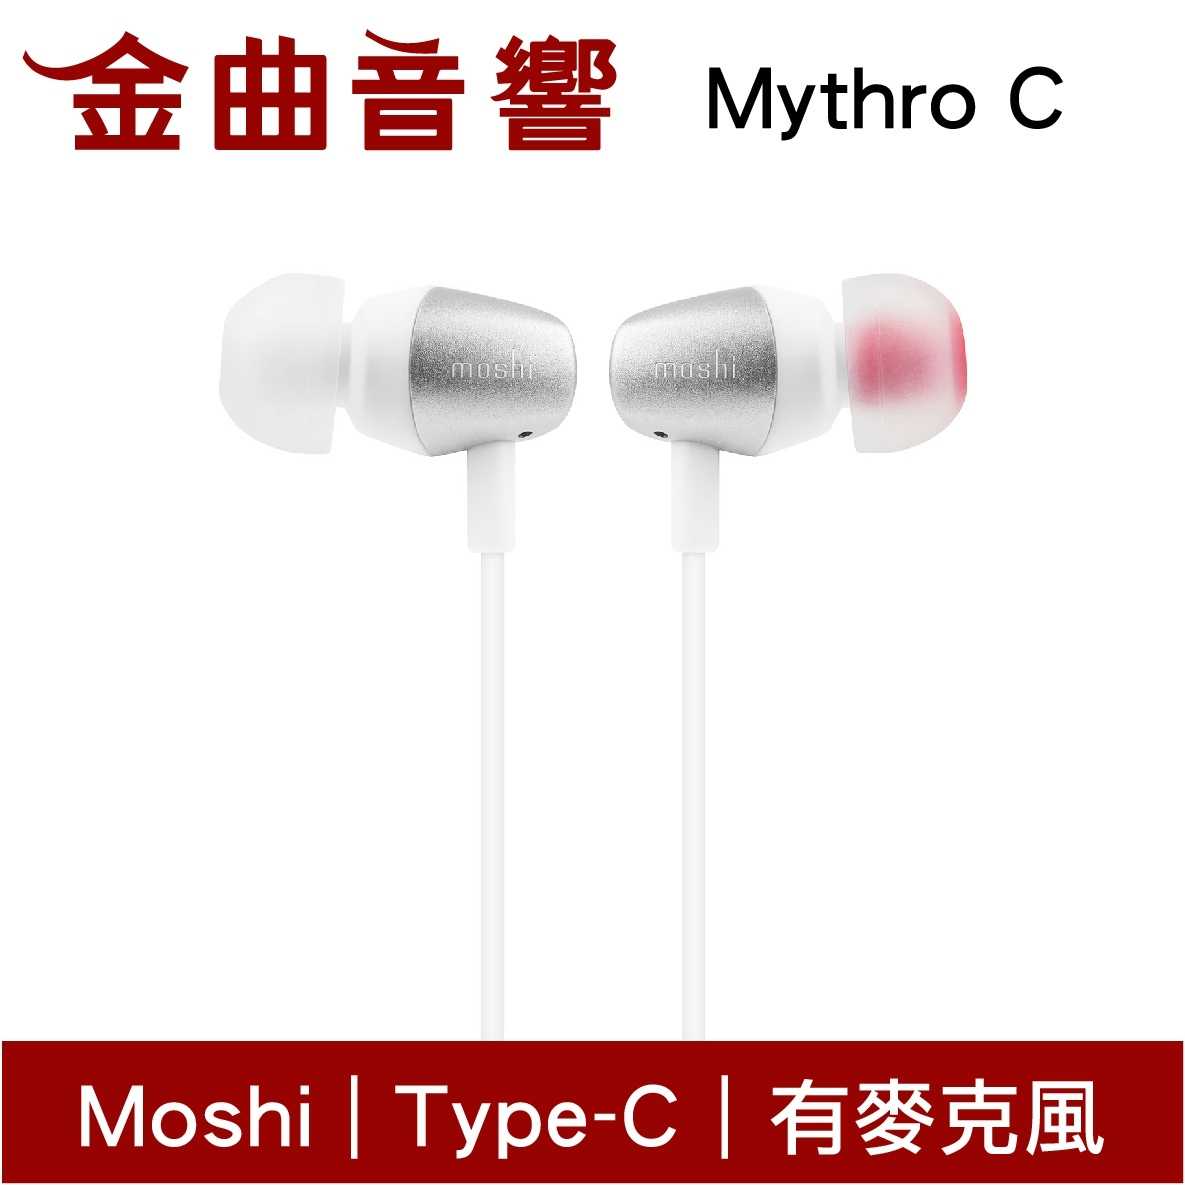 Moshi Mythro C USB Type-C 兩色可選 耳機 麥克風耳機 | 金曲音響